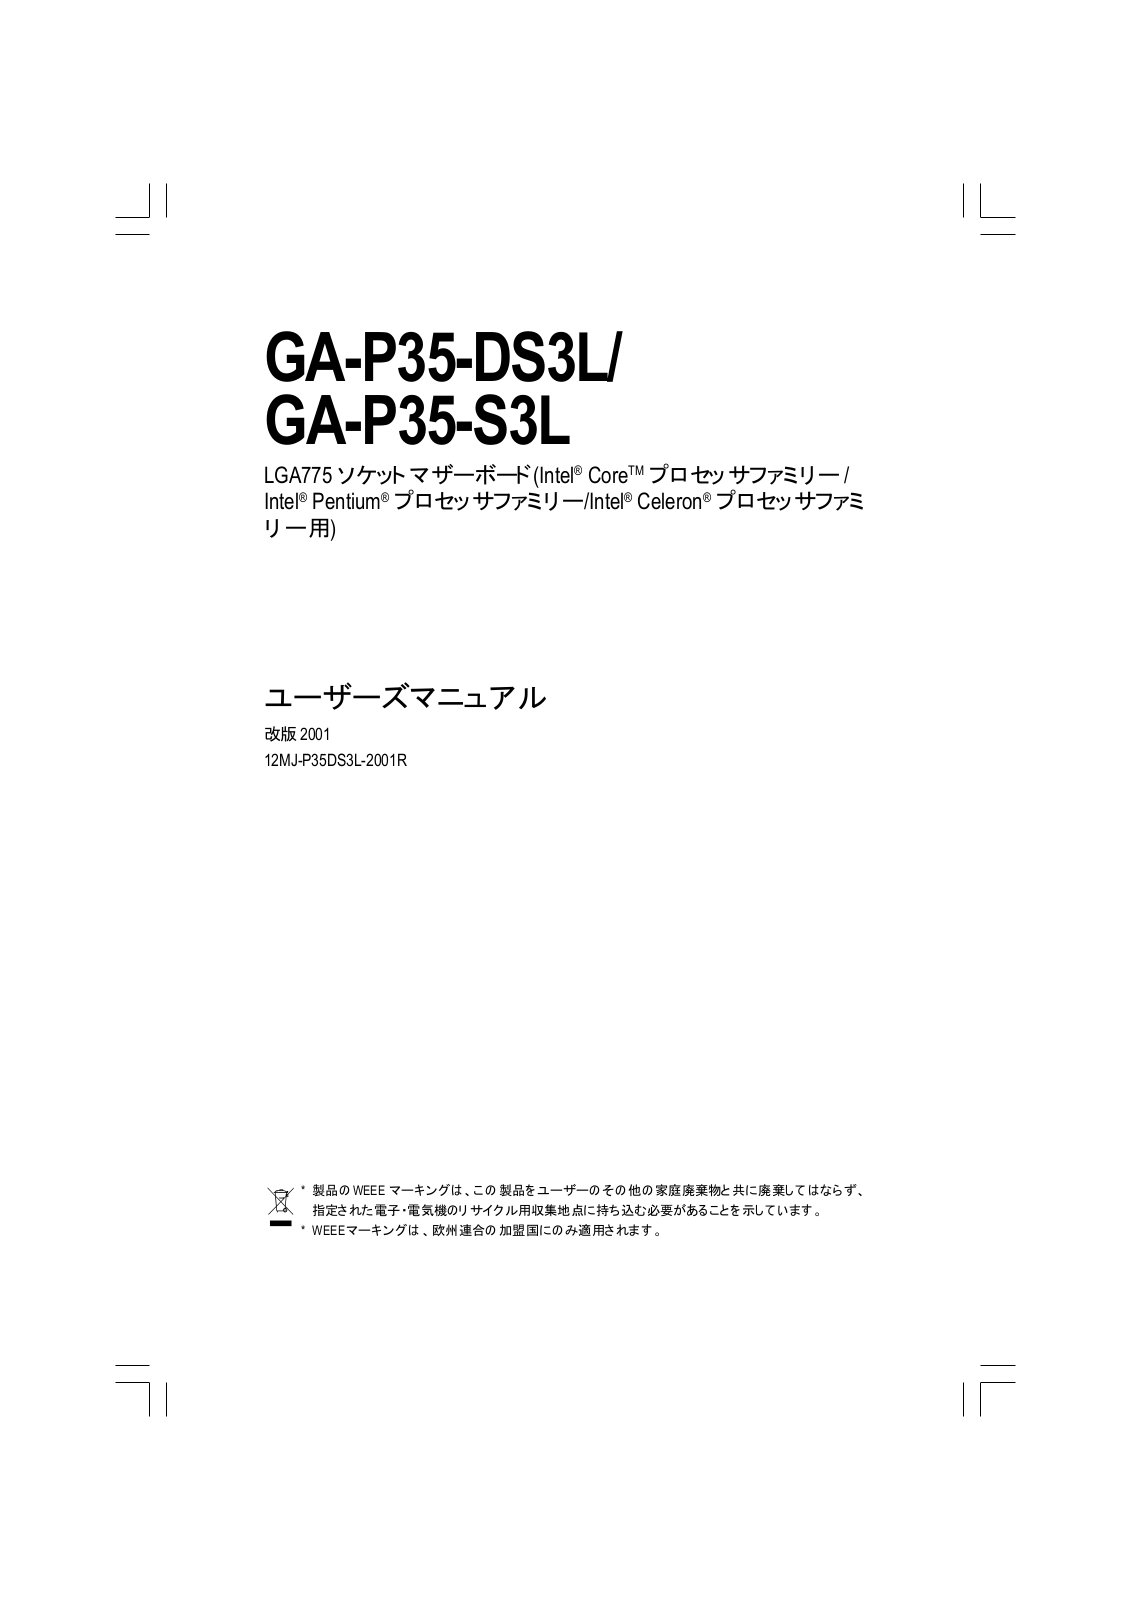 Gigabyte GA-P35-S3L, GA-P35-DS3L User Manual